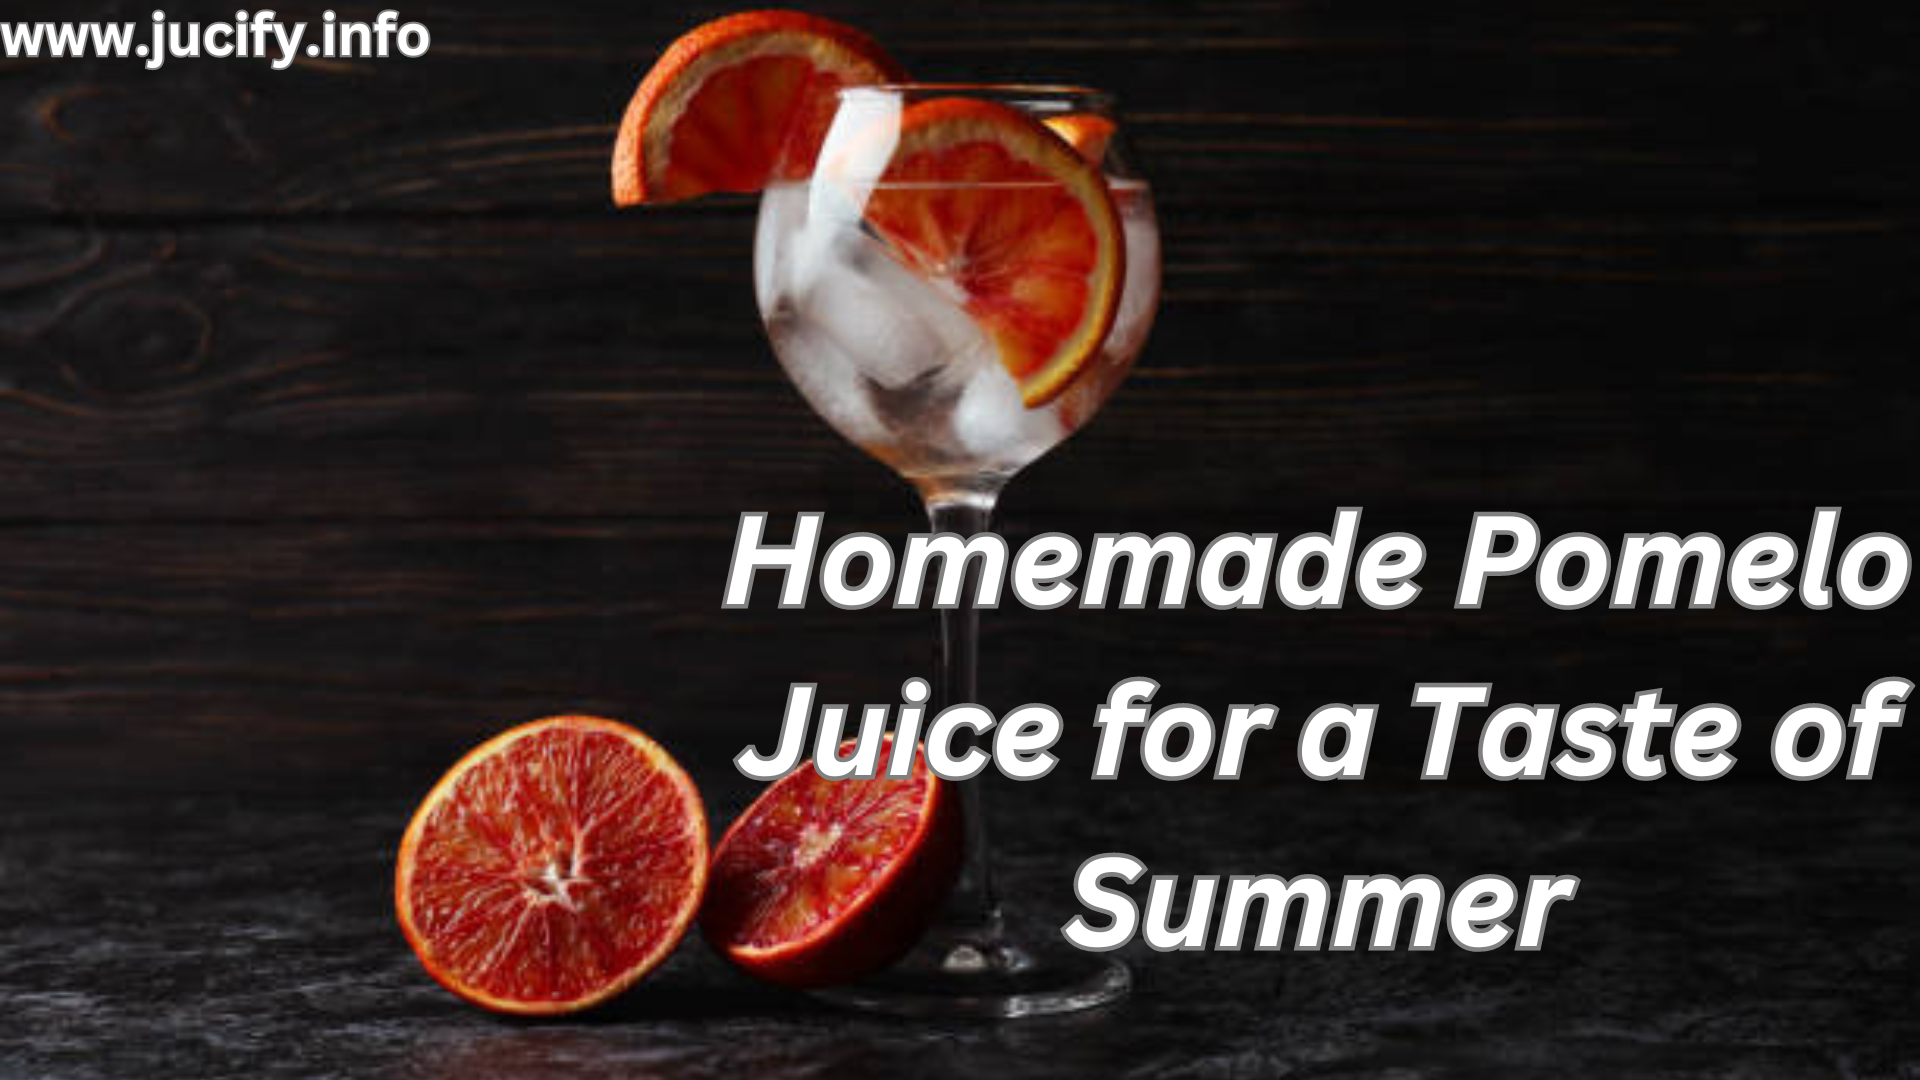 Homemade Pomelo Juice for a Taste of Summer